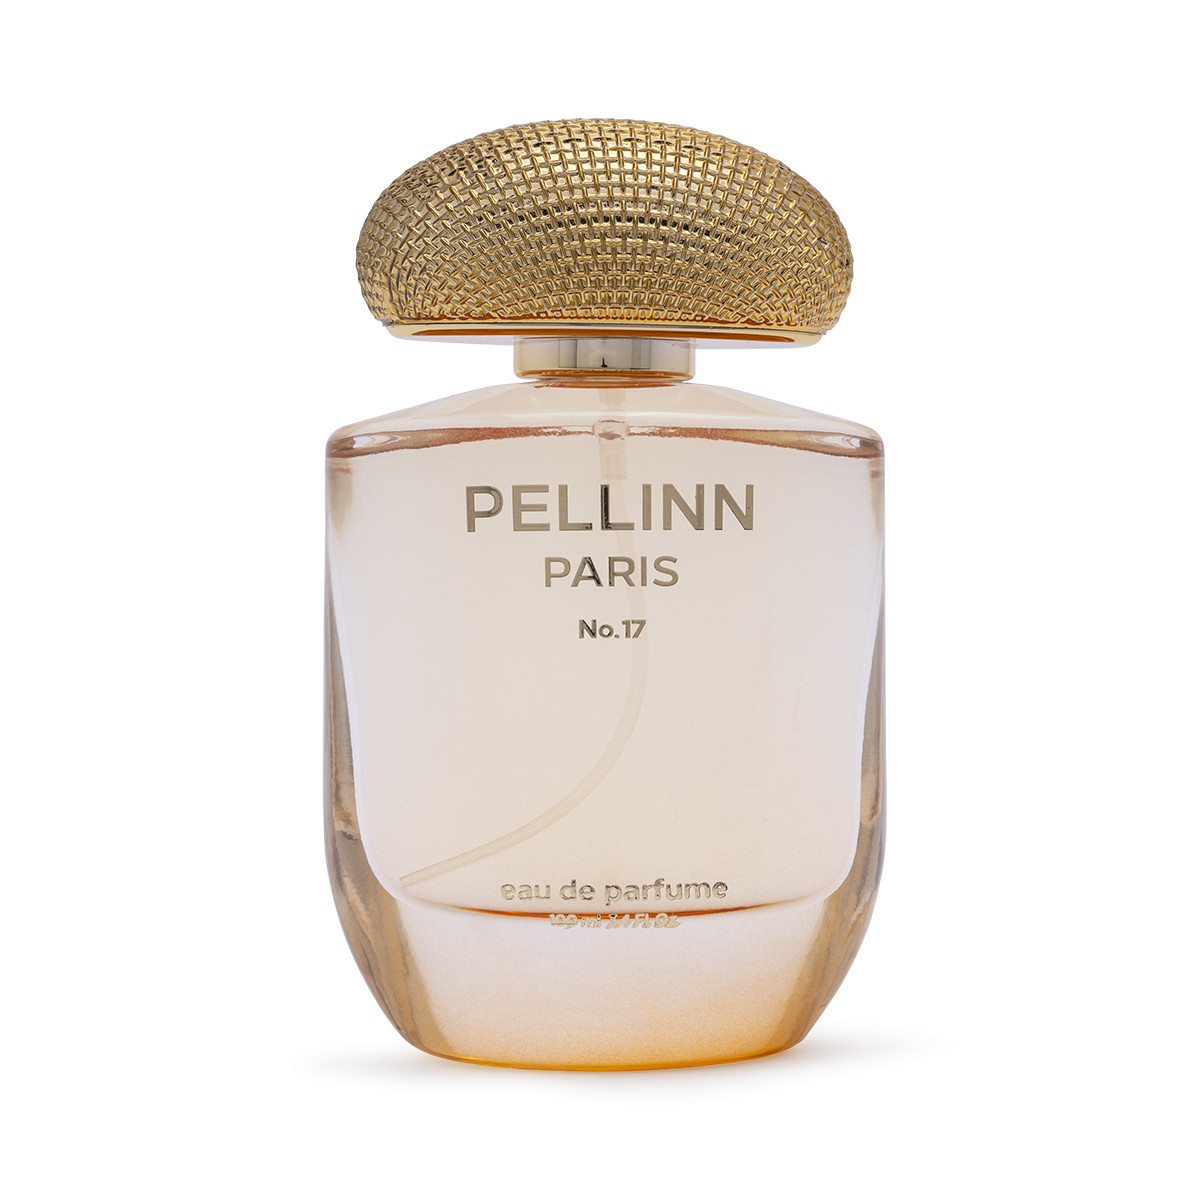 Pellinn Paris No.17 Çiçeksi ve Oryantal Kadın EDP Parfüm 100 ml  Pellinn Paris Parfüm